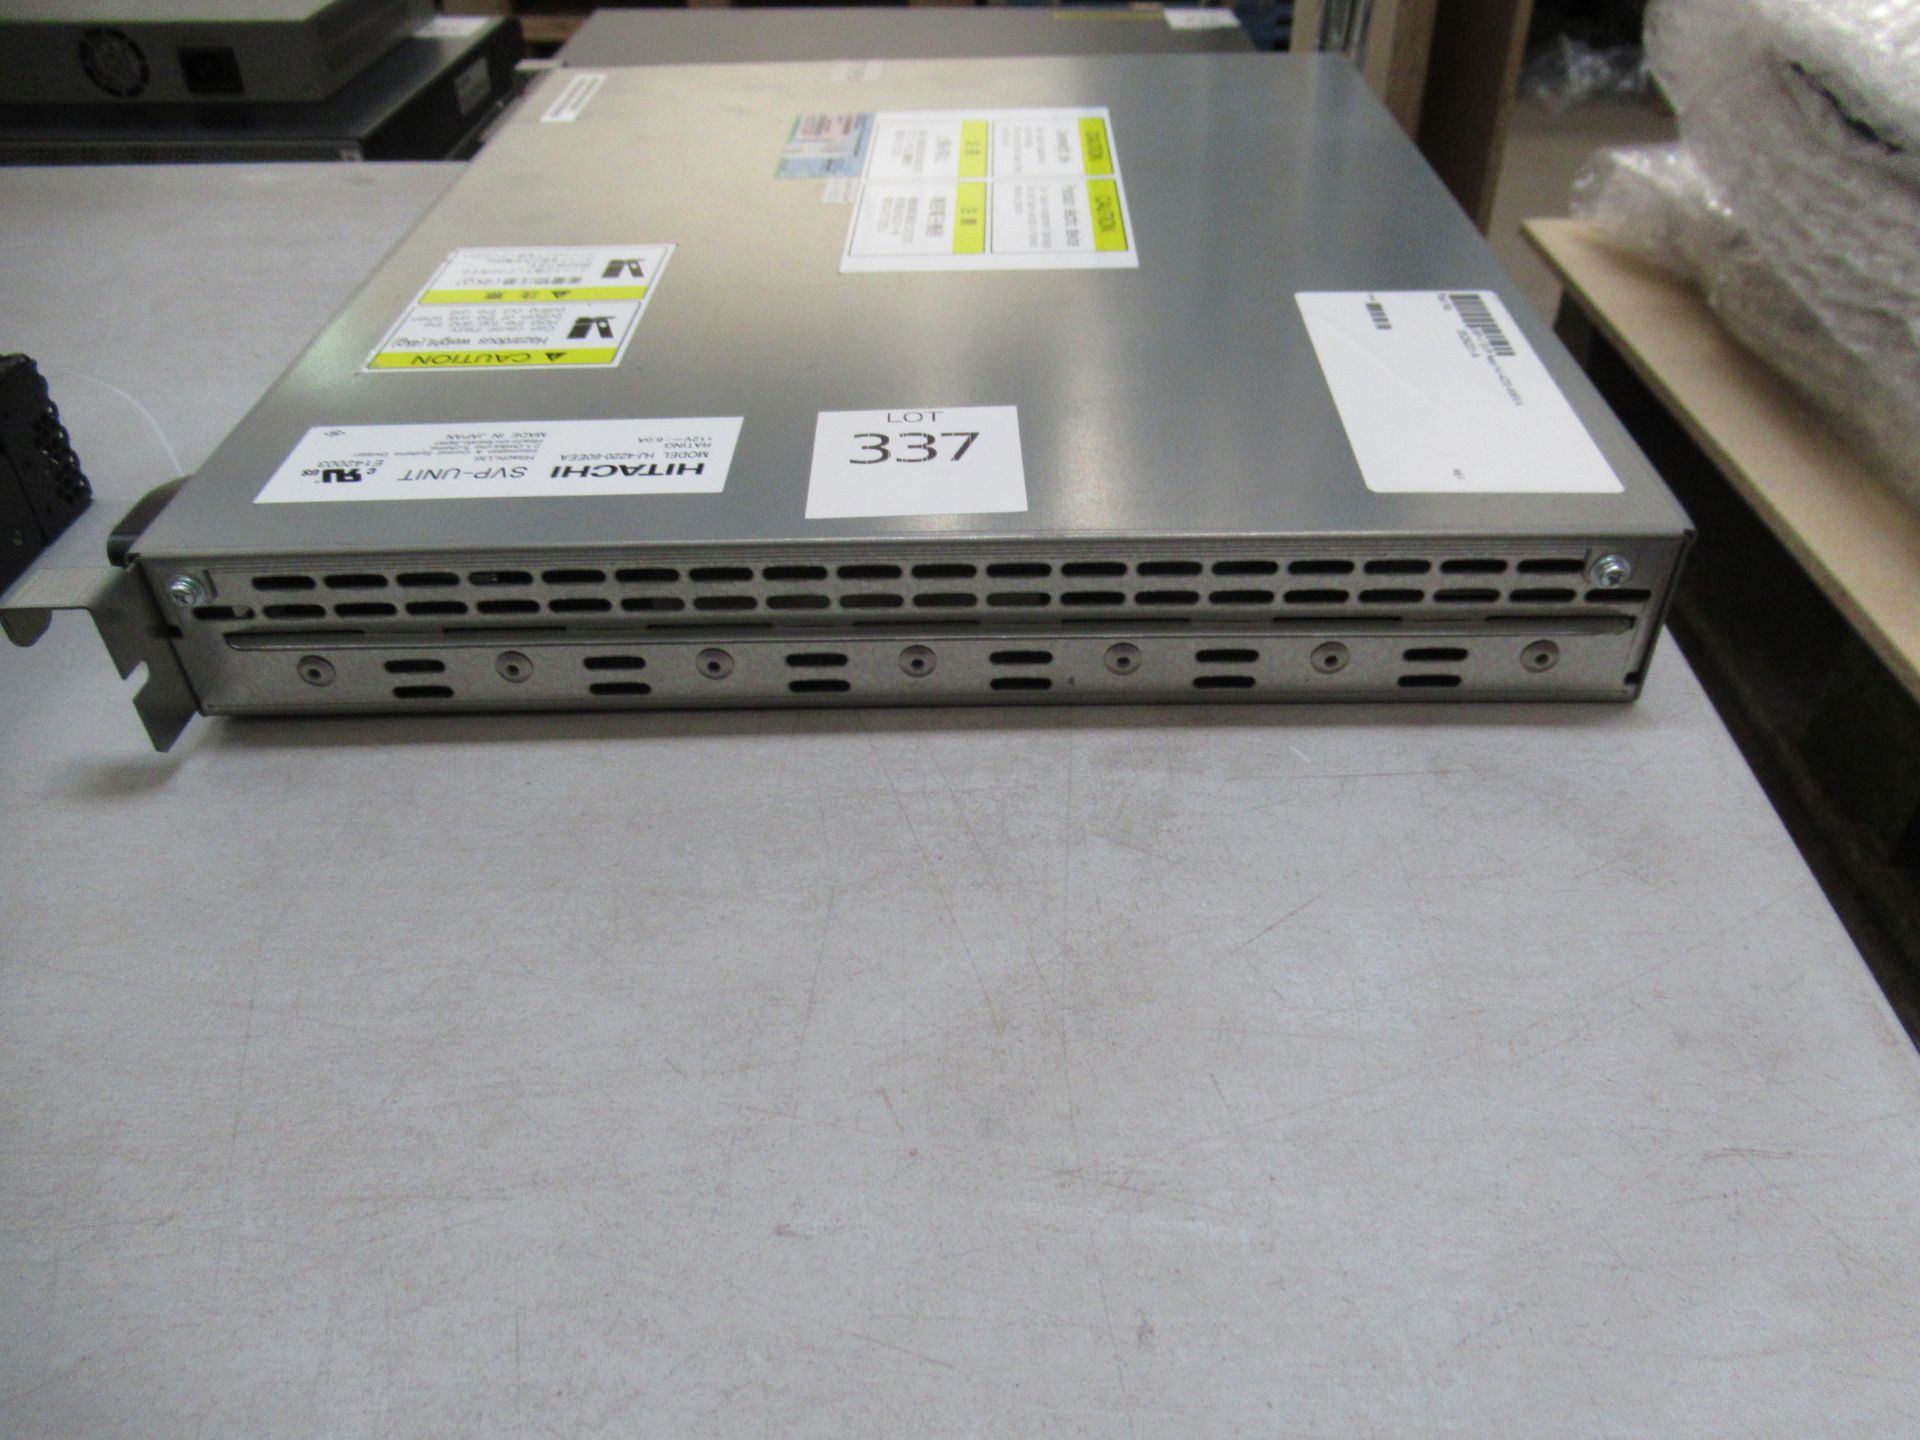 1 x HPE 24 Port SFP zl Module J8706A, ProCurve zl series and 1 x HPE HP 24-port Gig-T vl Module - Image 11 of 34